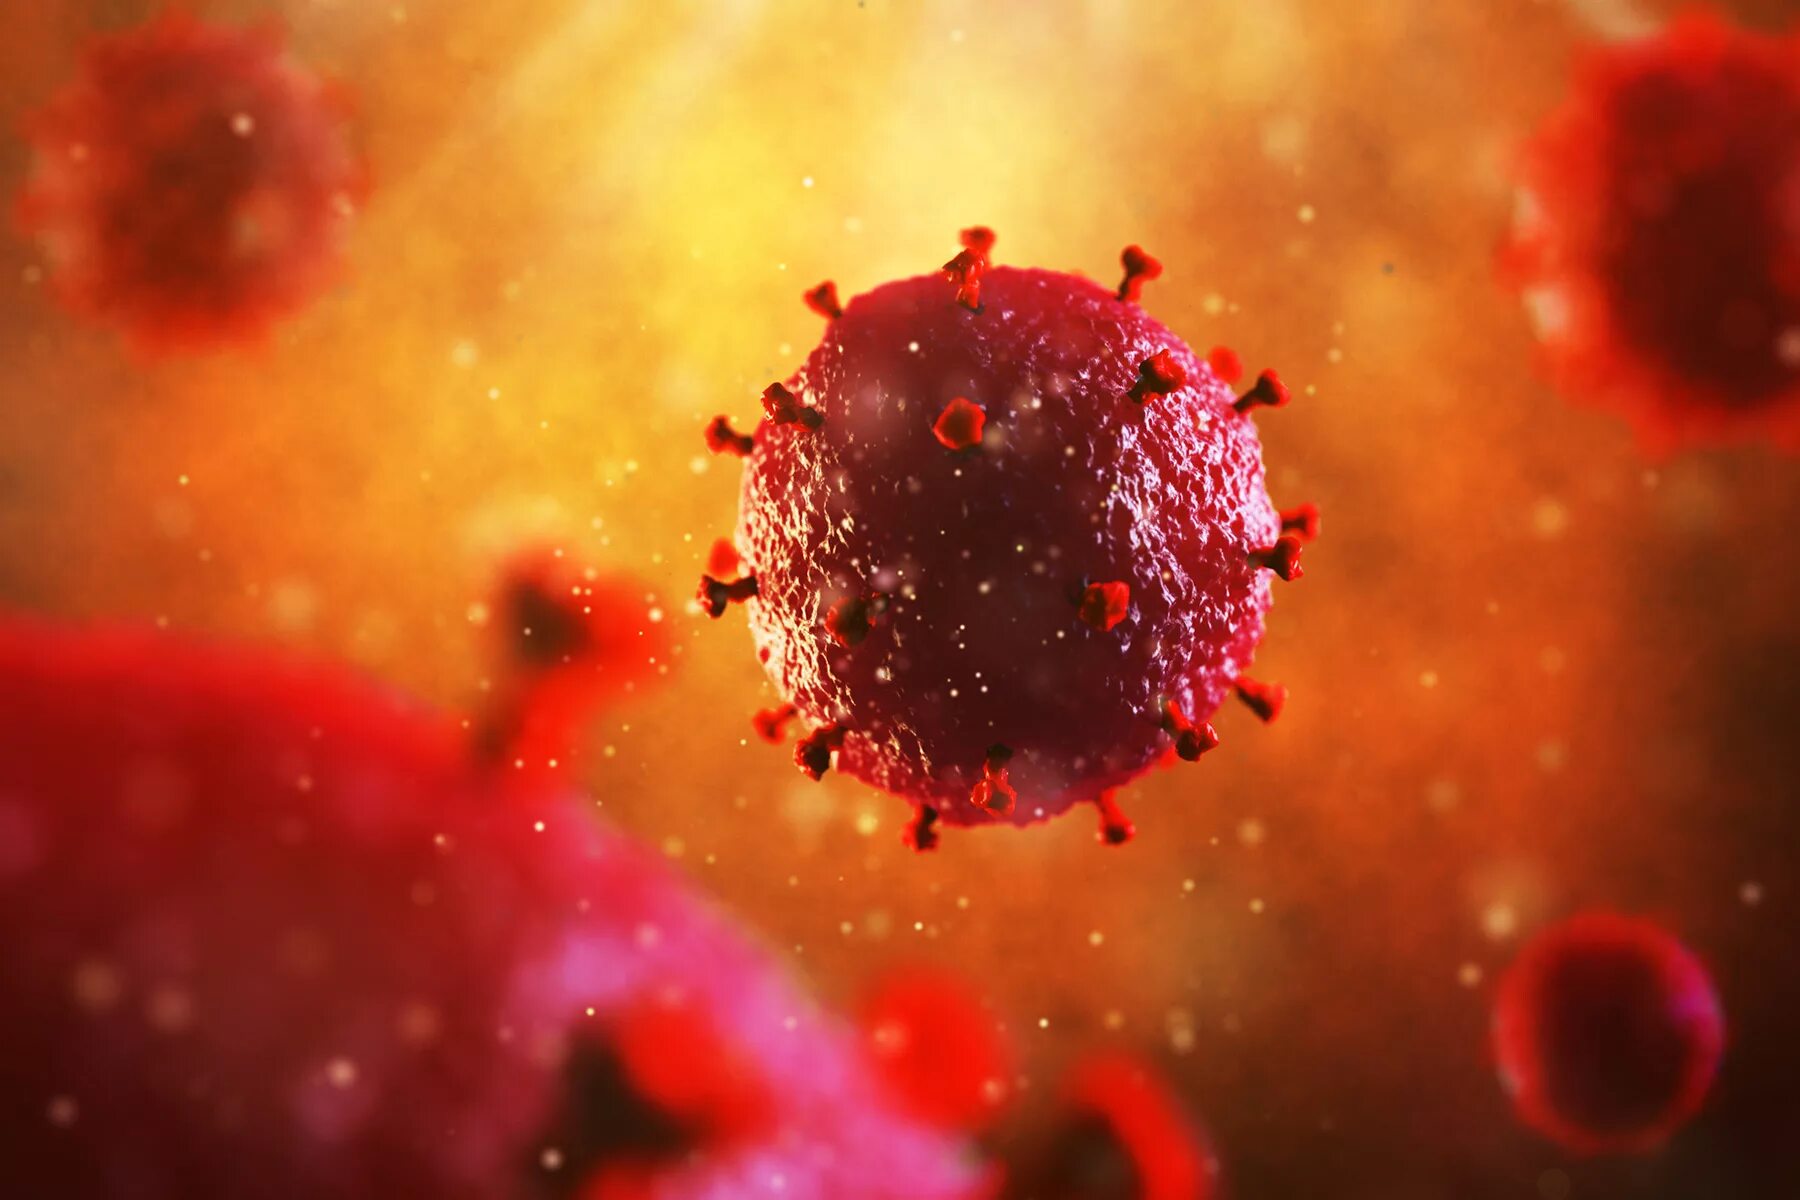 Фоны спид. Вирус м13. Вирус иммунодефицита человека (Human Immunodeficiency virus). Клетка ВИЧ. ВИЧ инфекция клетки.